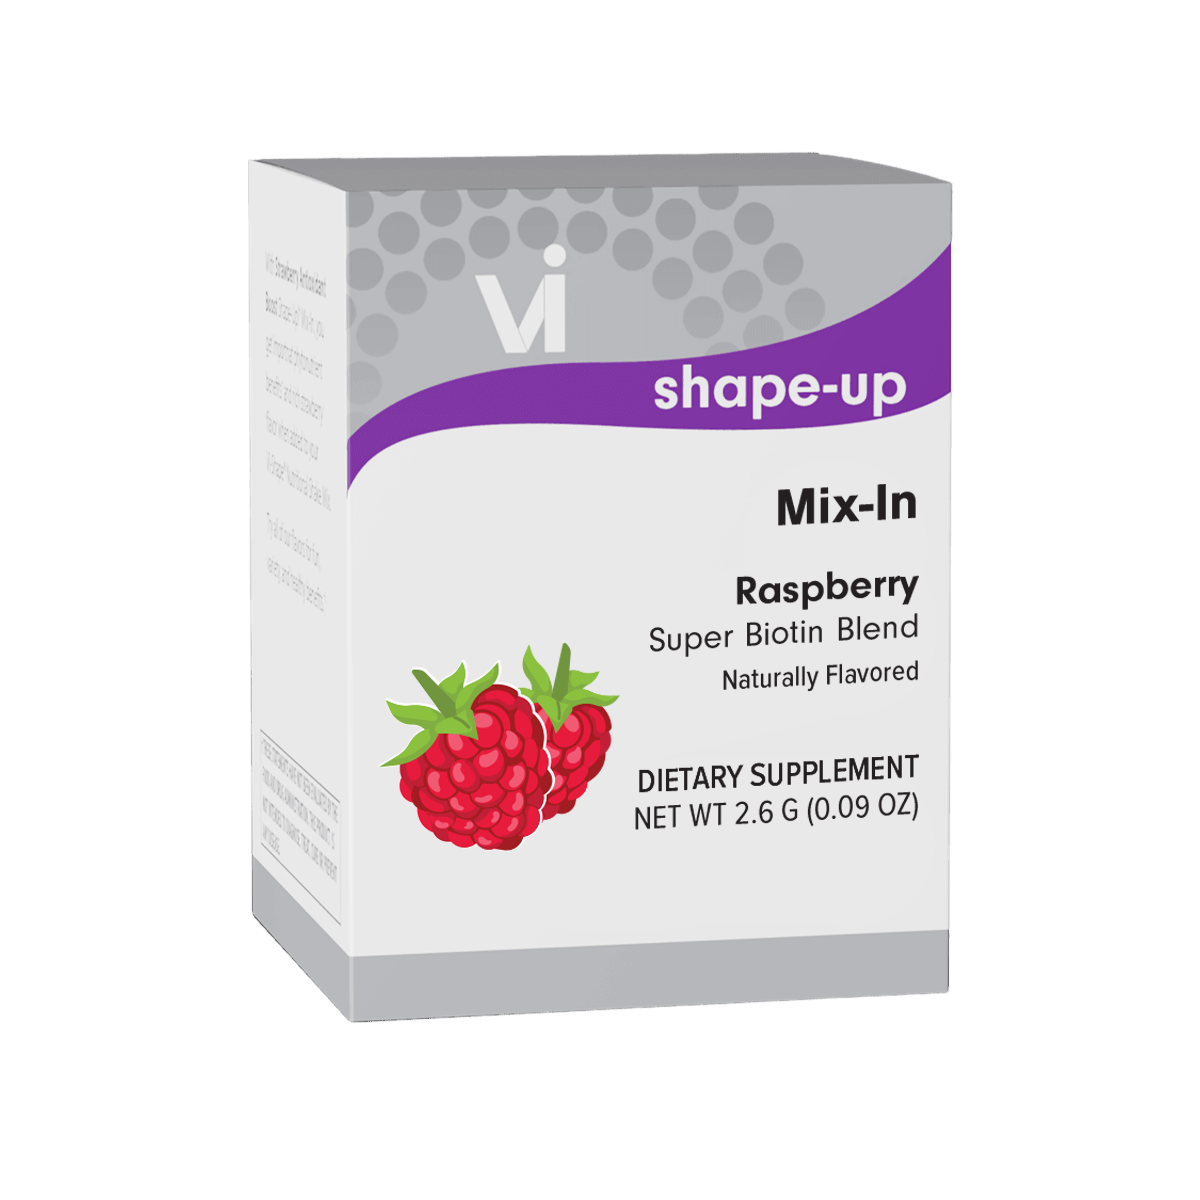 Raspberry Super Biotin Mix In